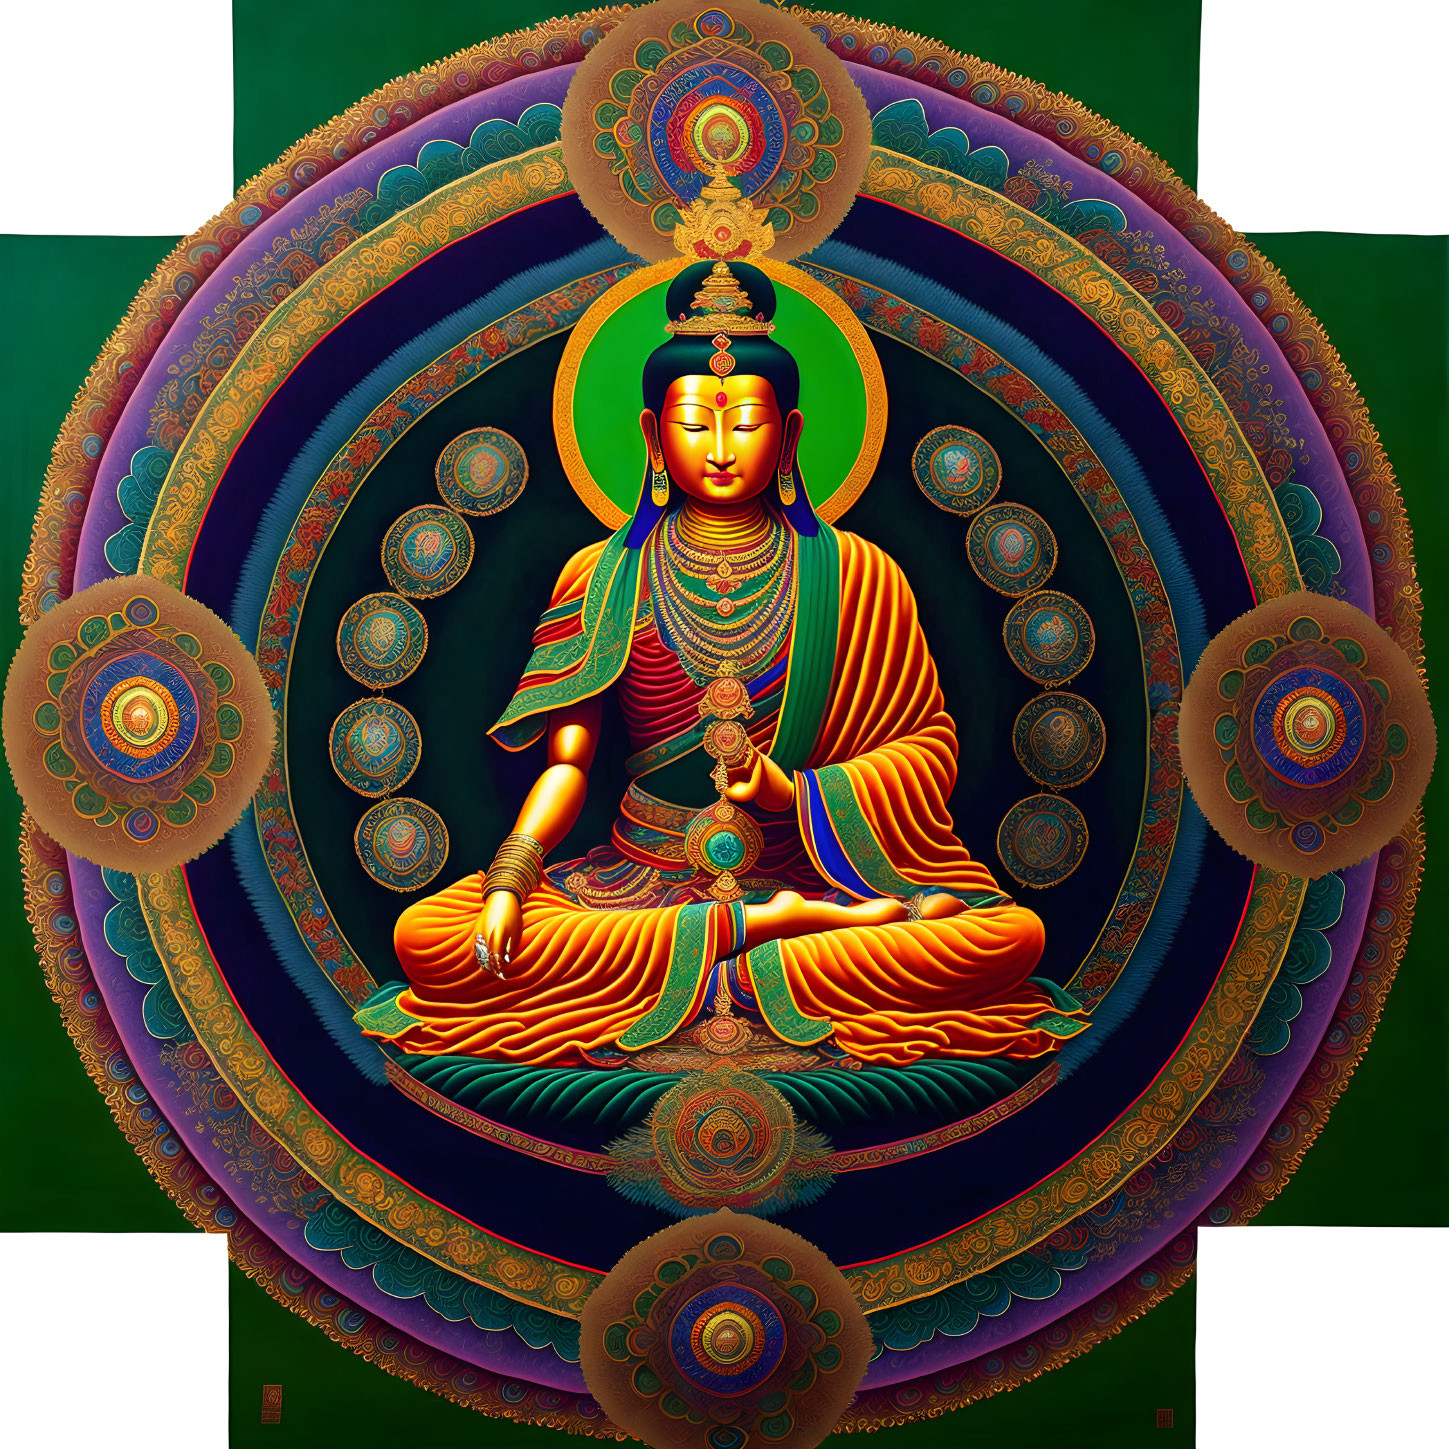 Colorful Meditating Figure Surrounded by Ornate Mandala